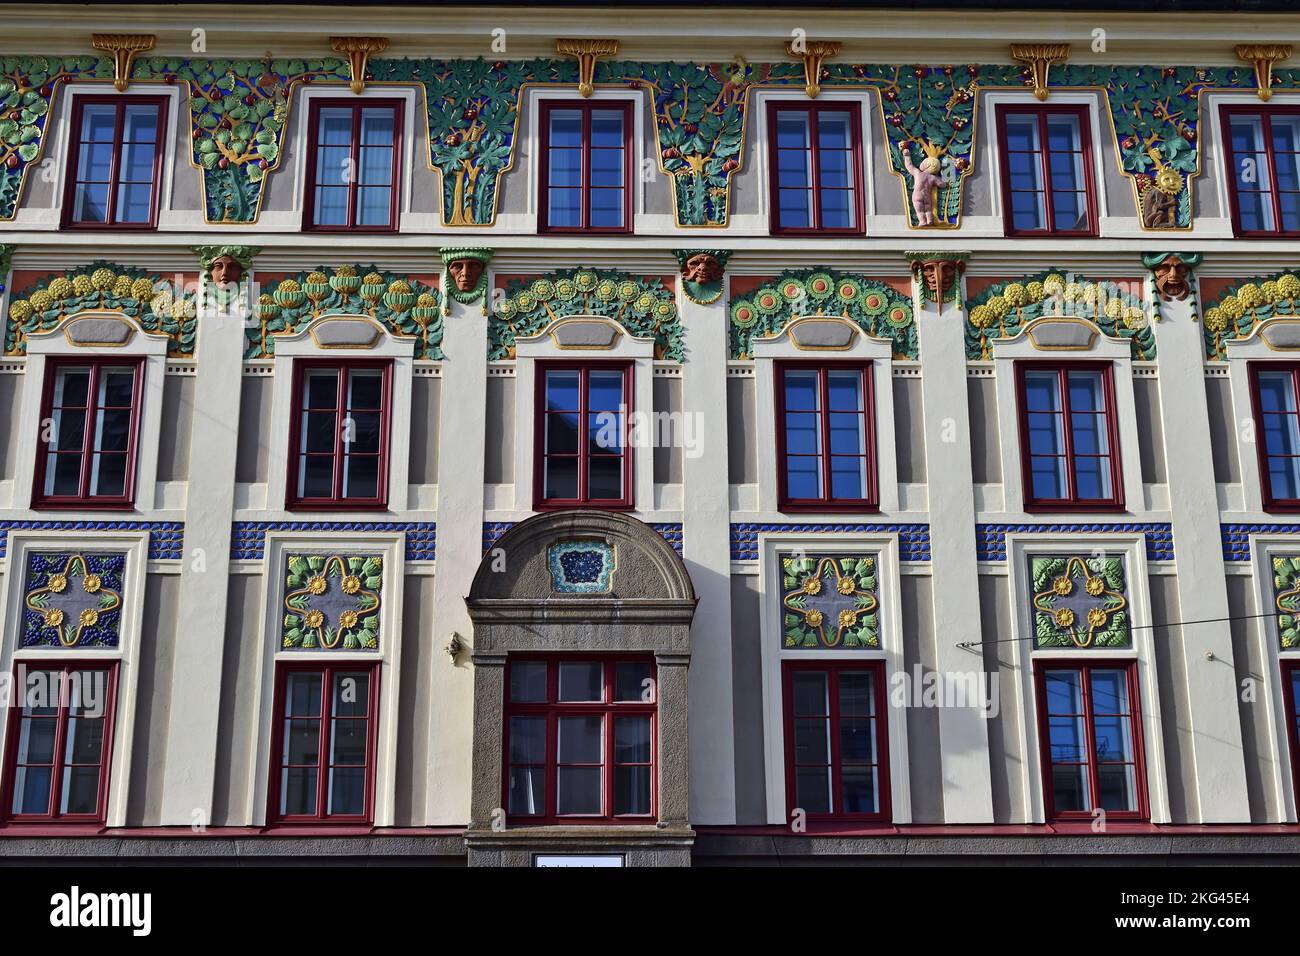 Winklerhouse, art nouveau architecture in Innsbruck, Austria Stock Photo